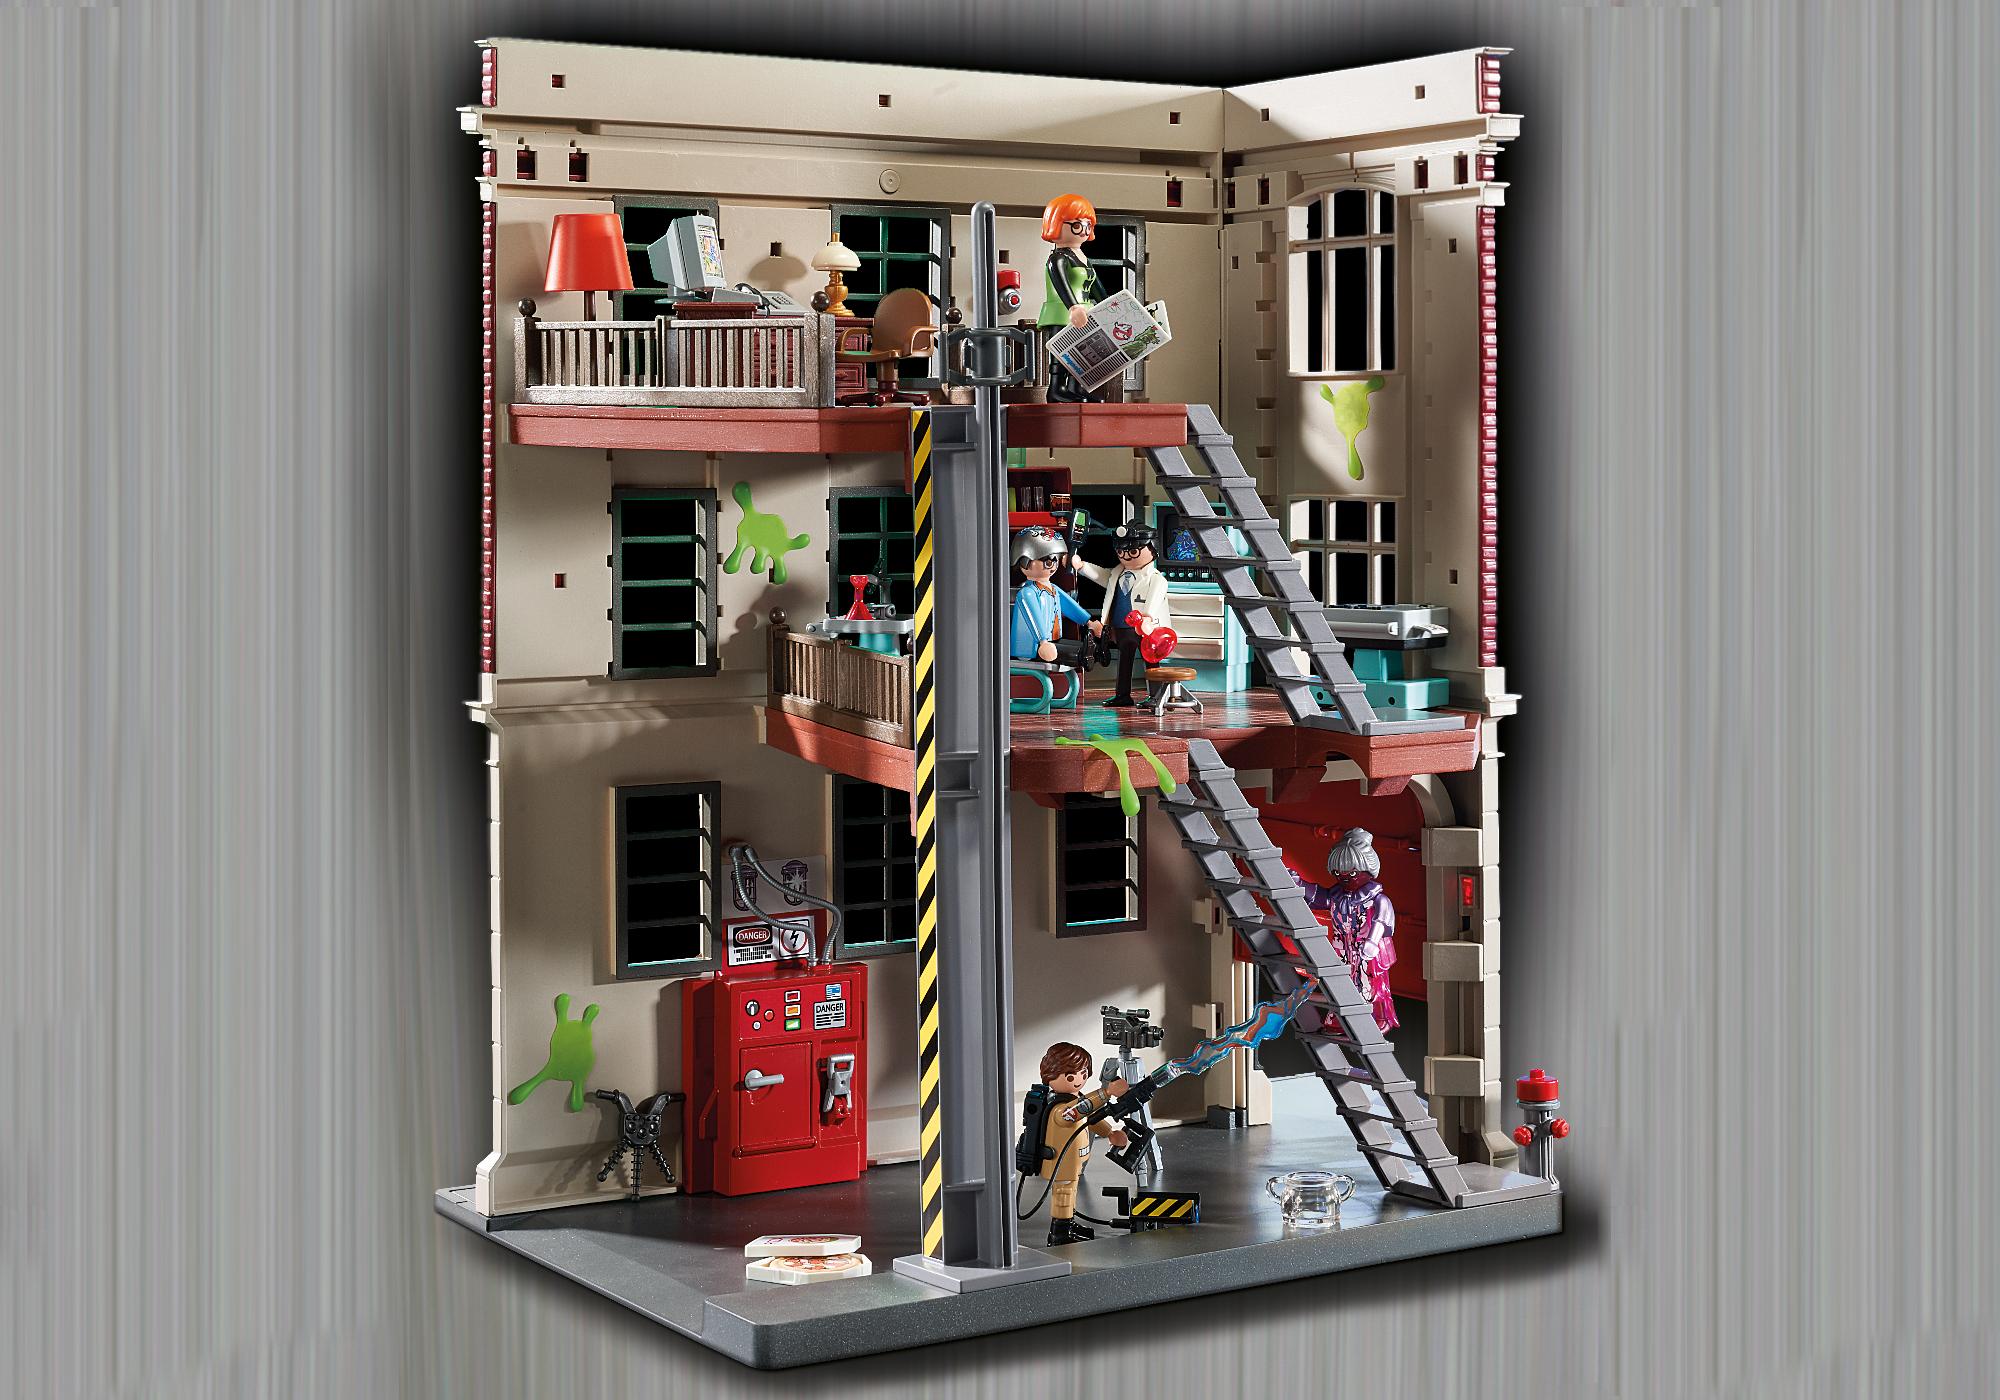 playmobil fire house